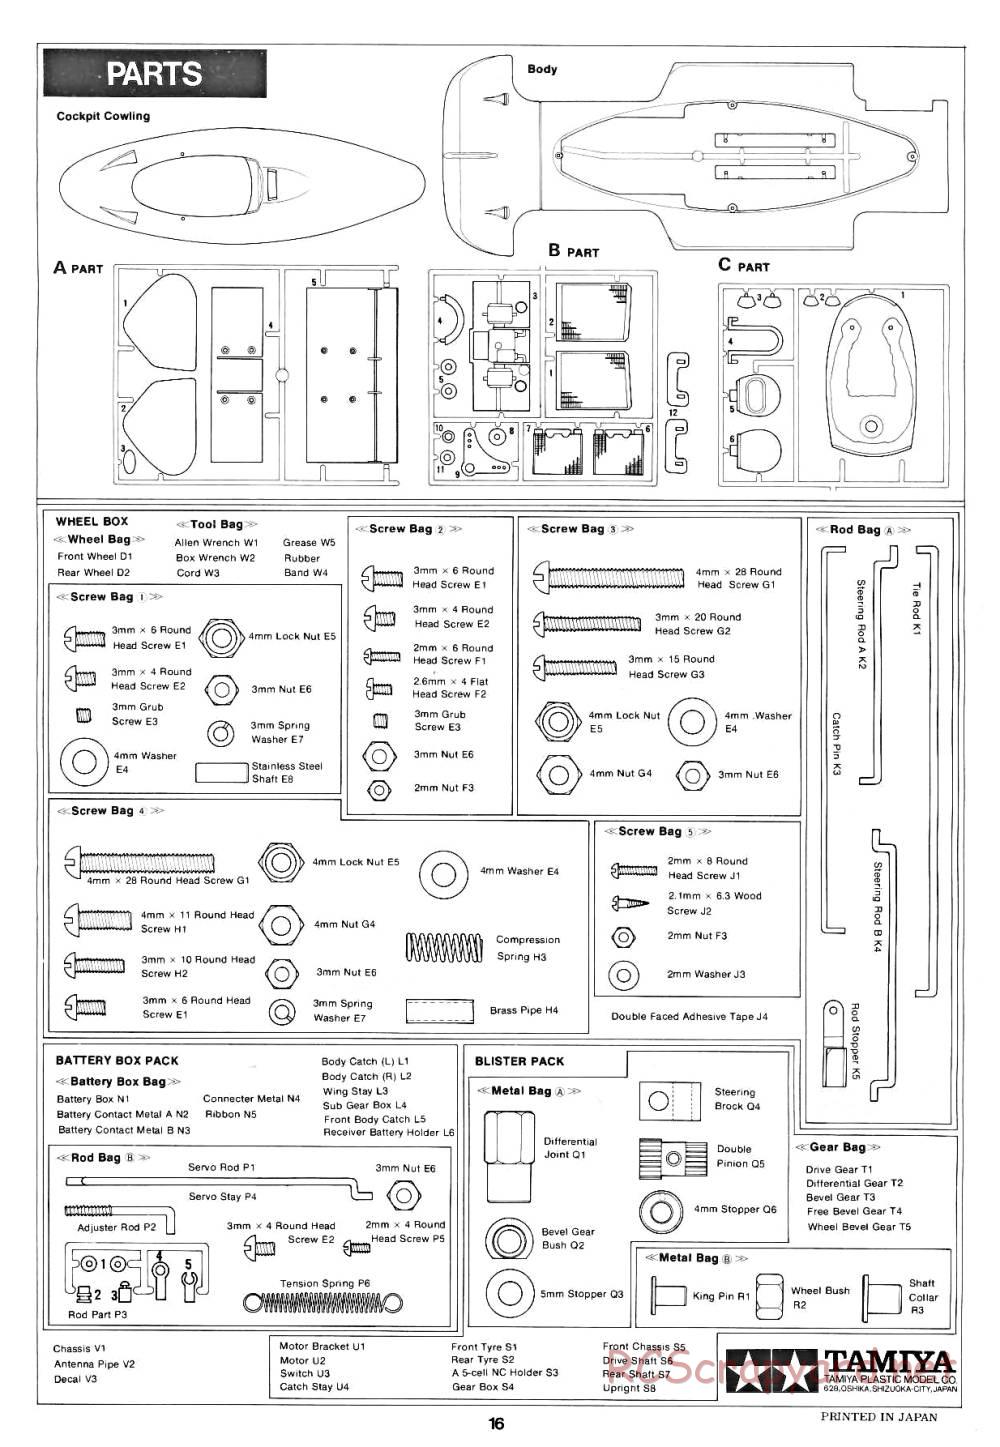 Tamiya - Tyrrell P34 Six Wheeler - 58003 - Manual - Page 16